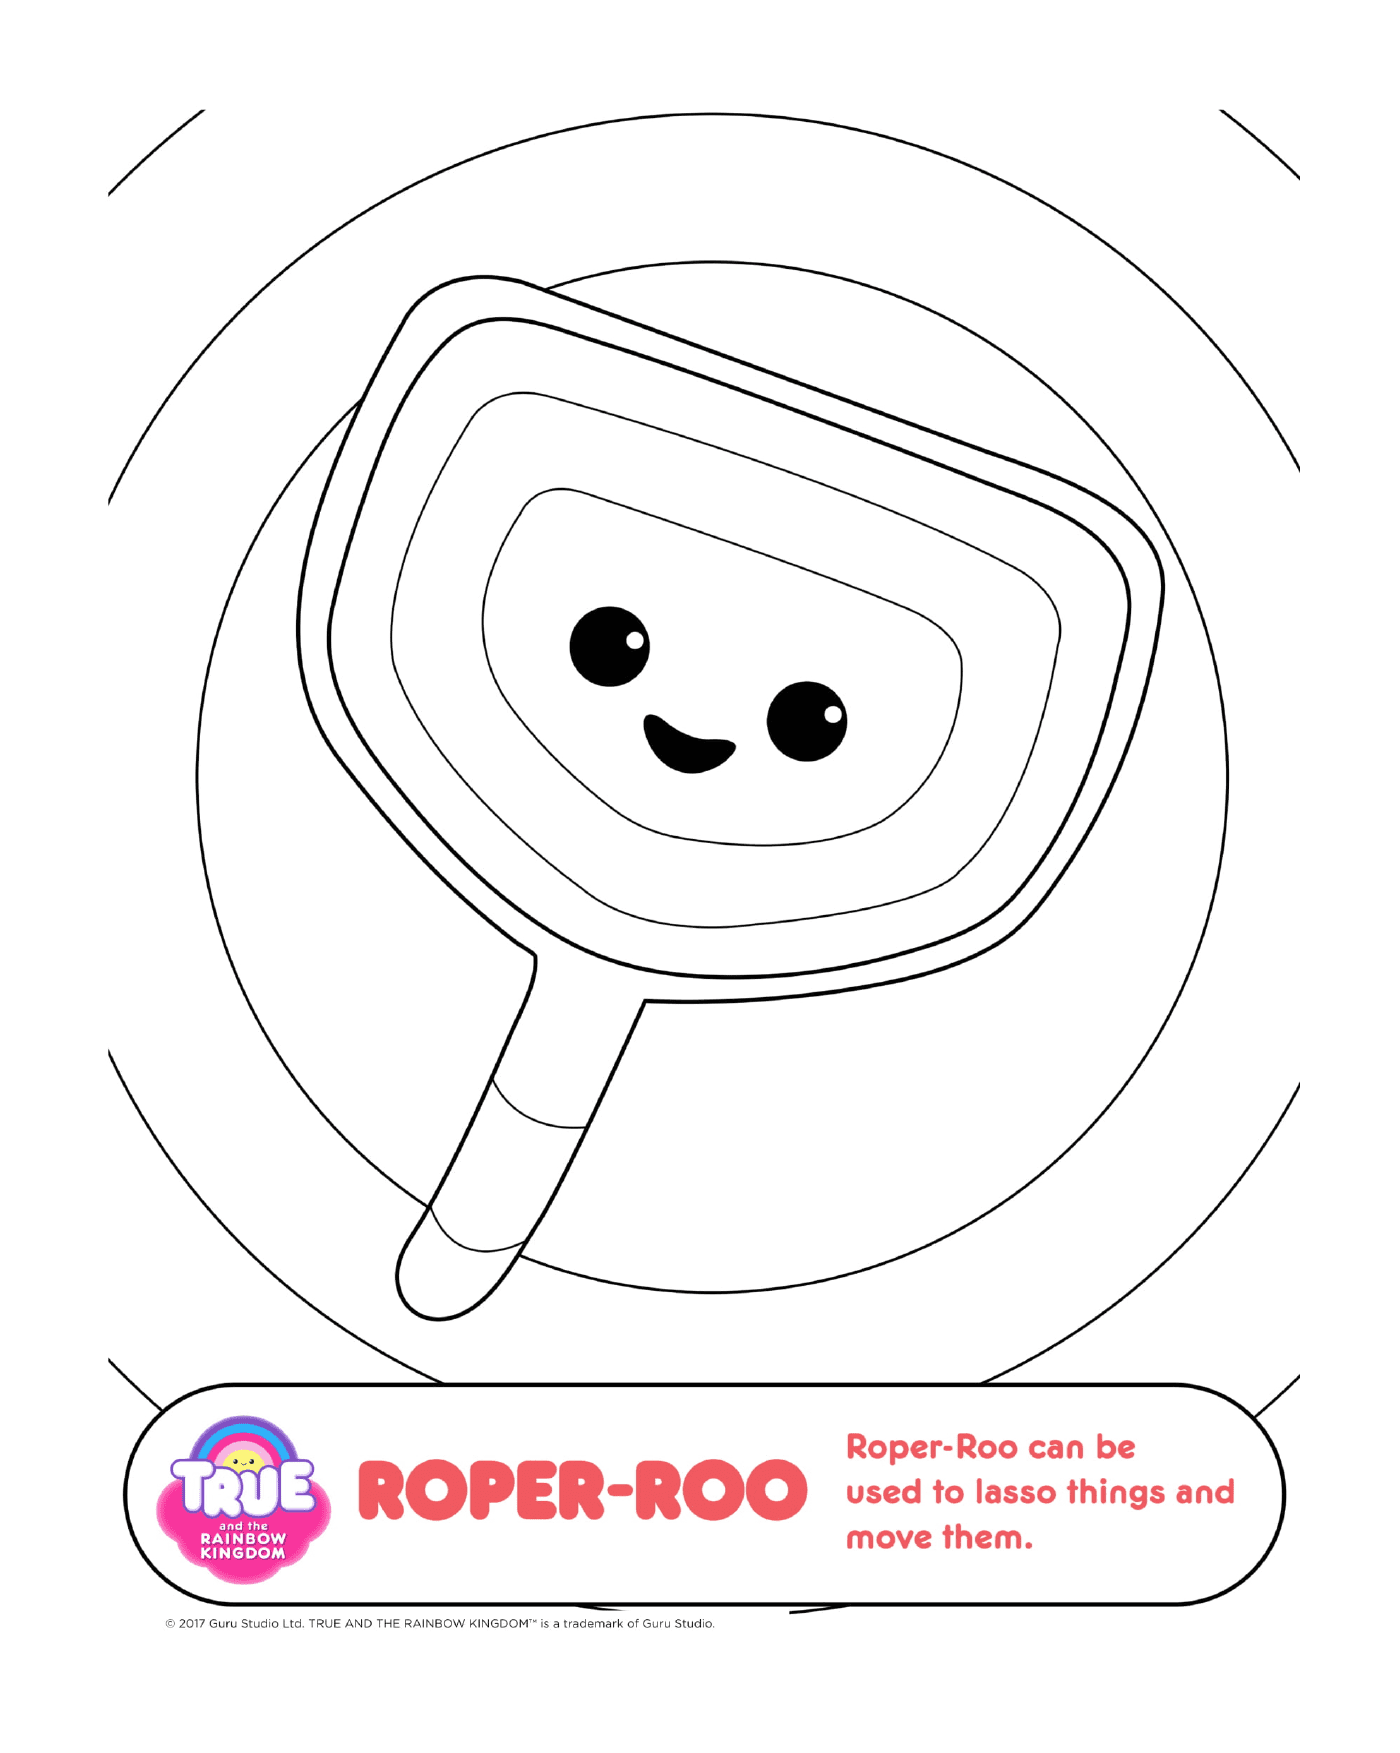  Rooper, a lollipop 